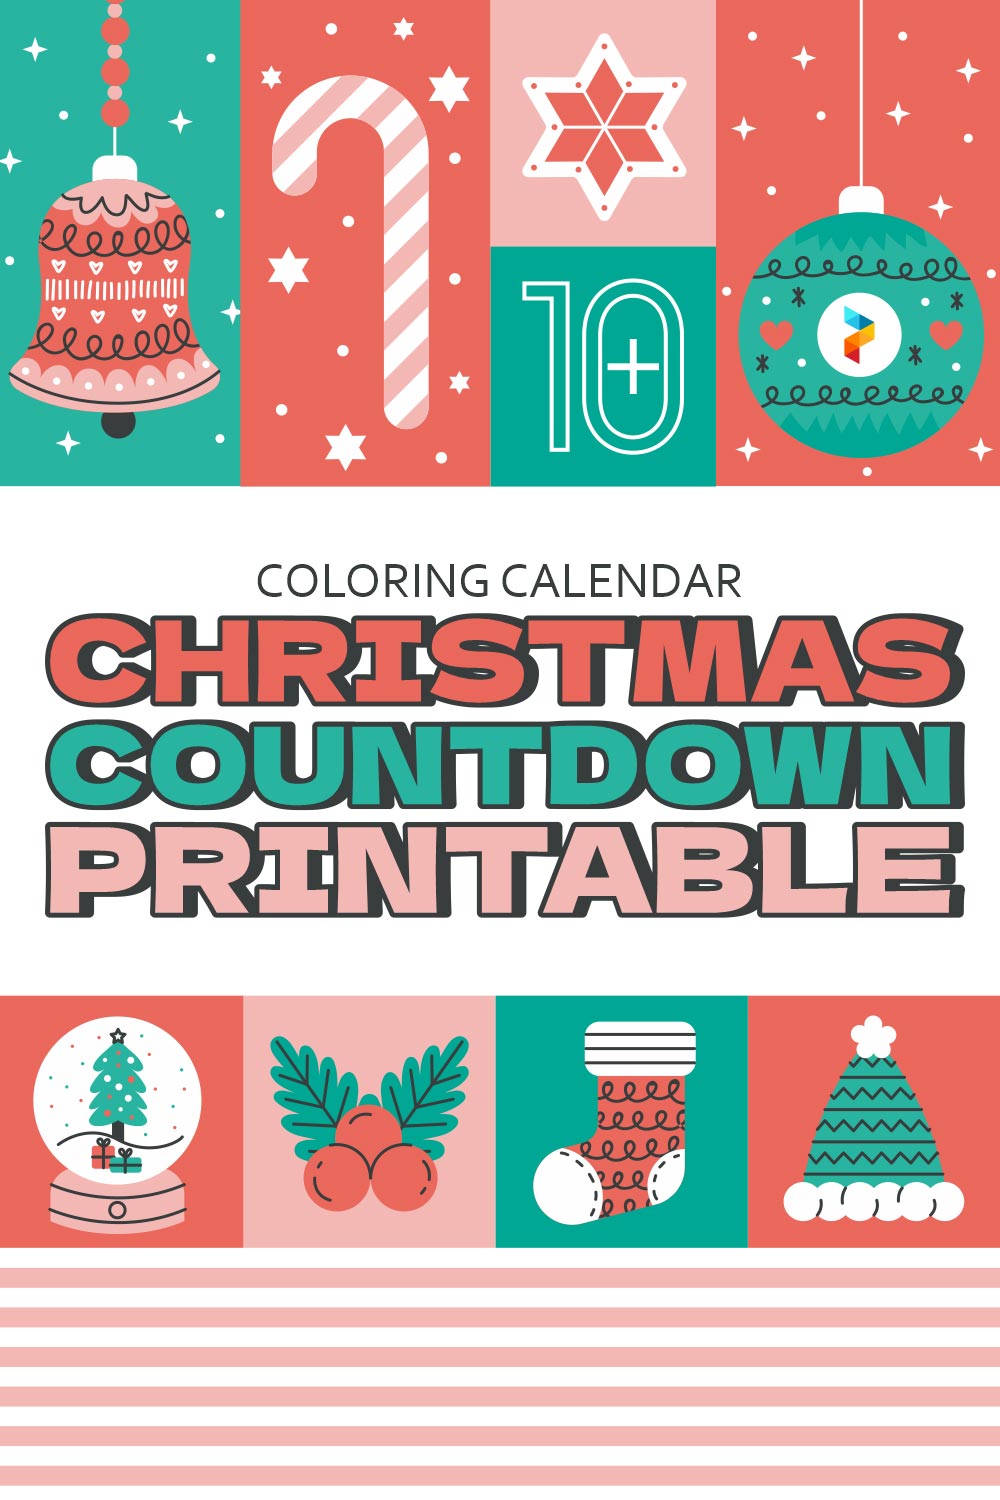 Coloring Calendar Christmas Countdown Printable